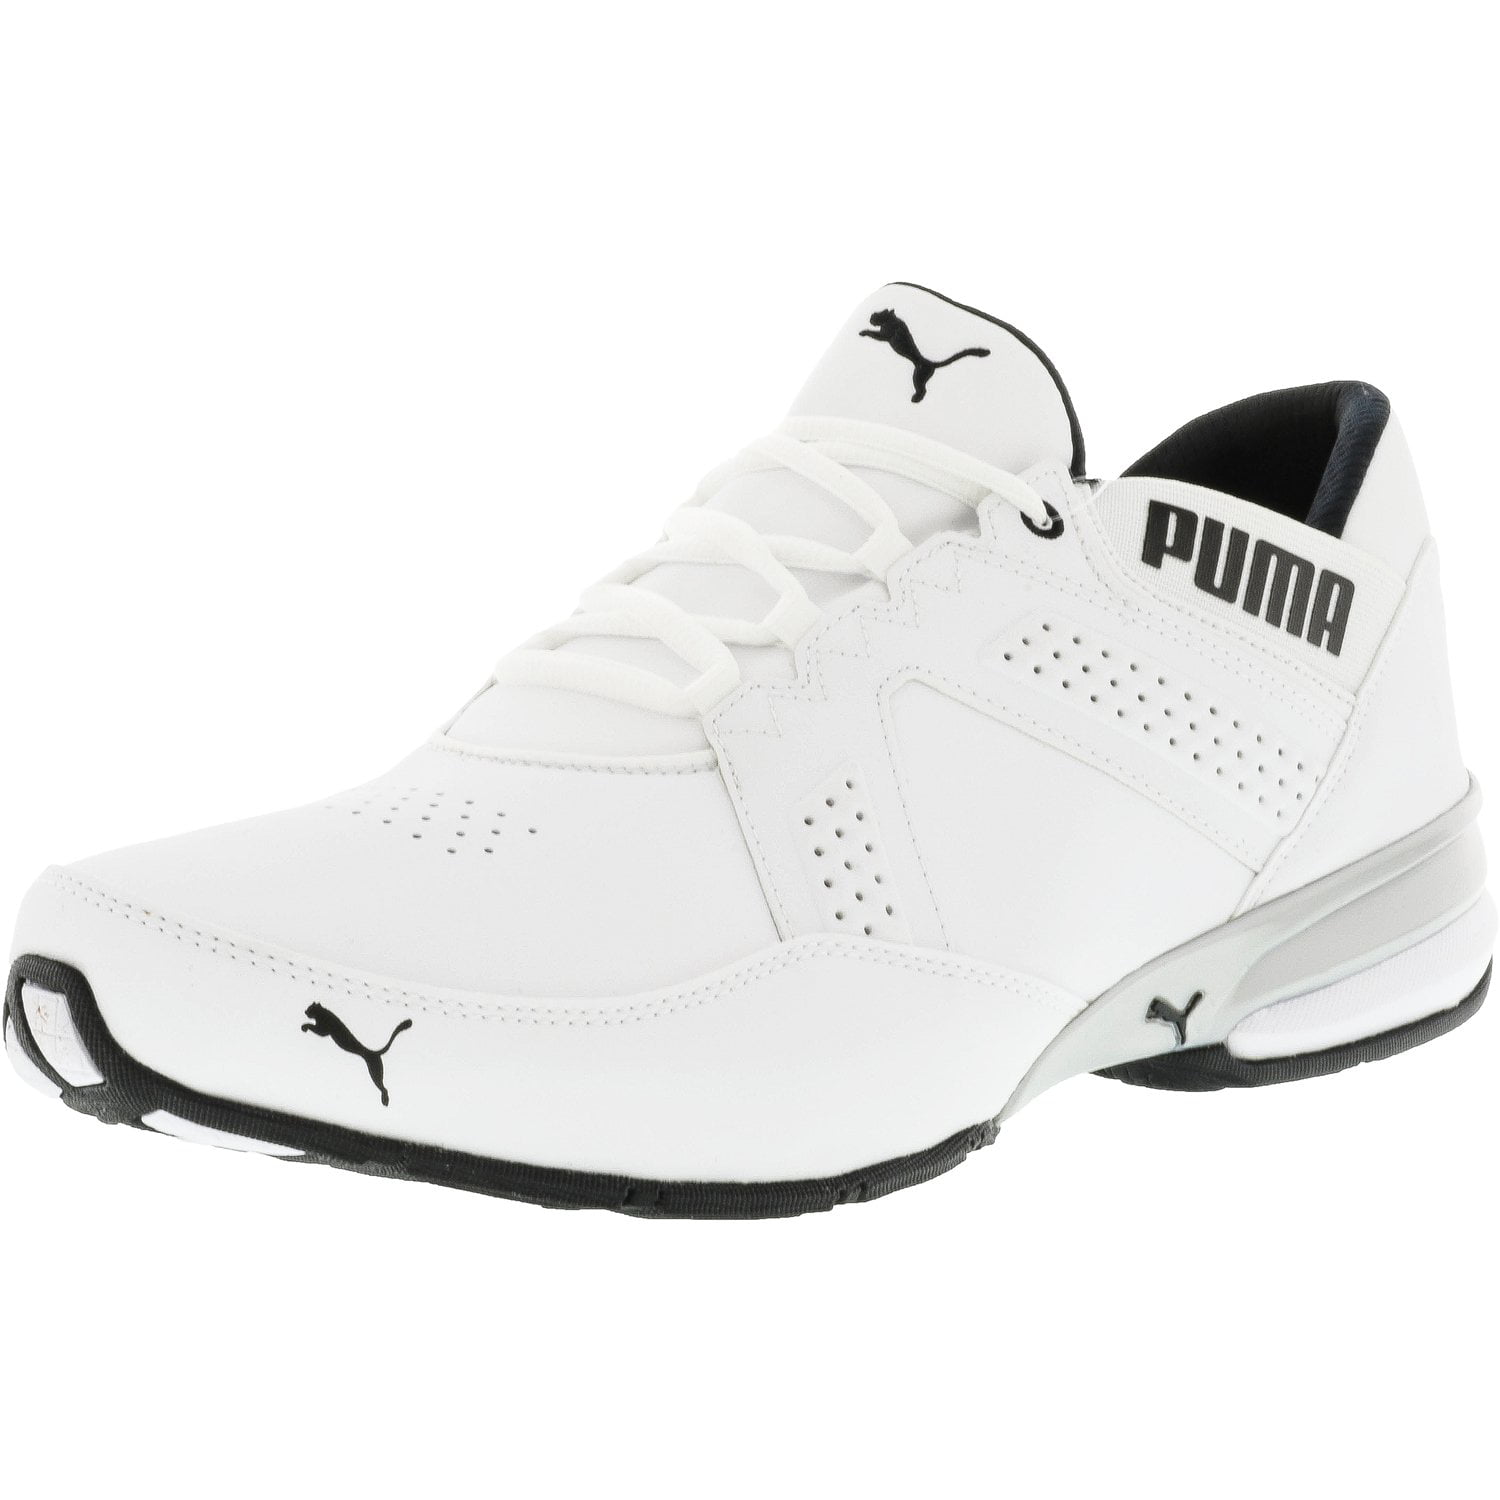 PUMA - Puma Men's Enzin Sl White / Black Ankle-High Running Shoe - 11.5M -  Walmart.com - Walmart.com